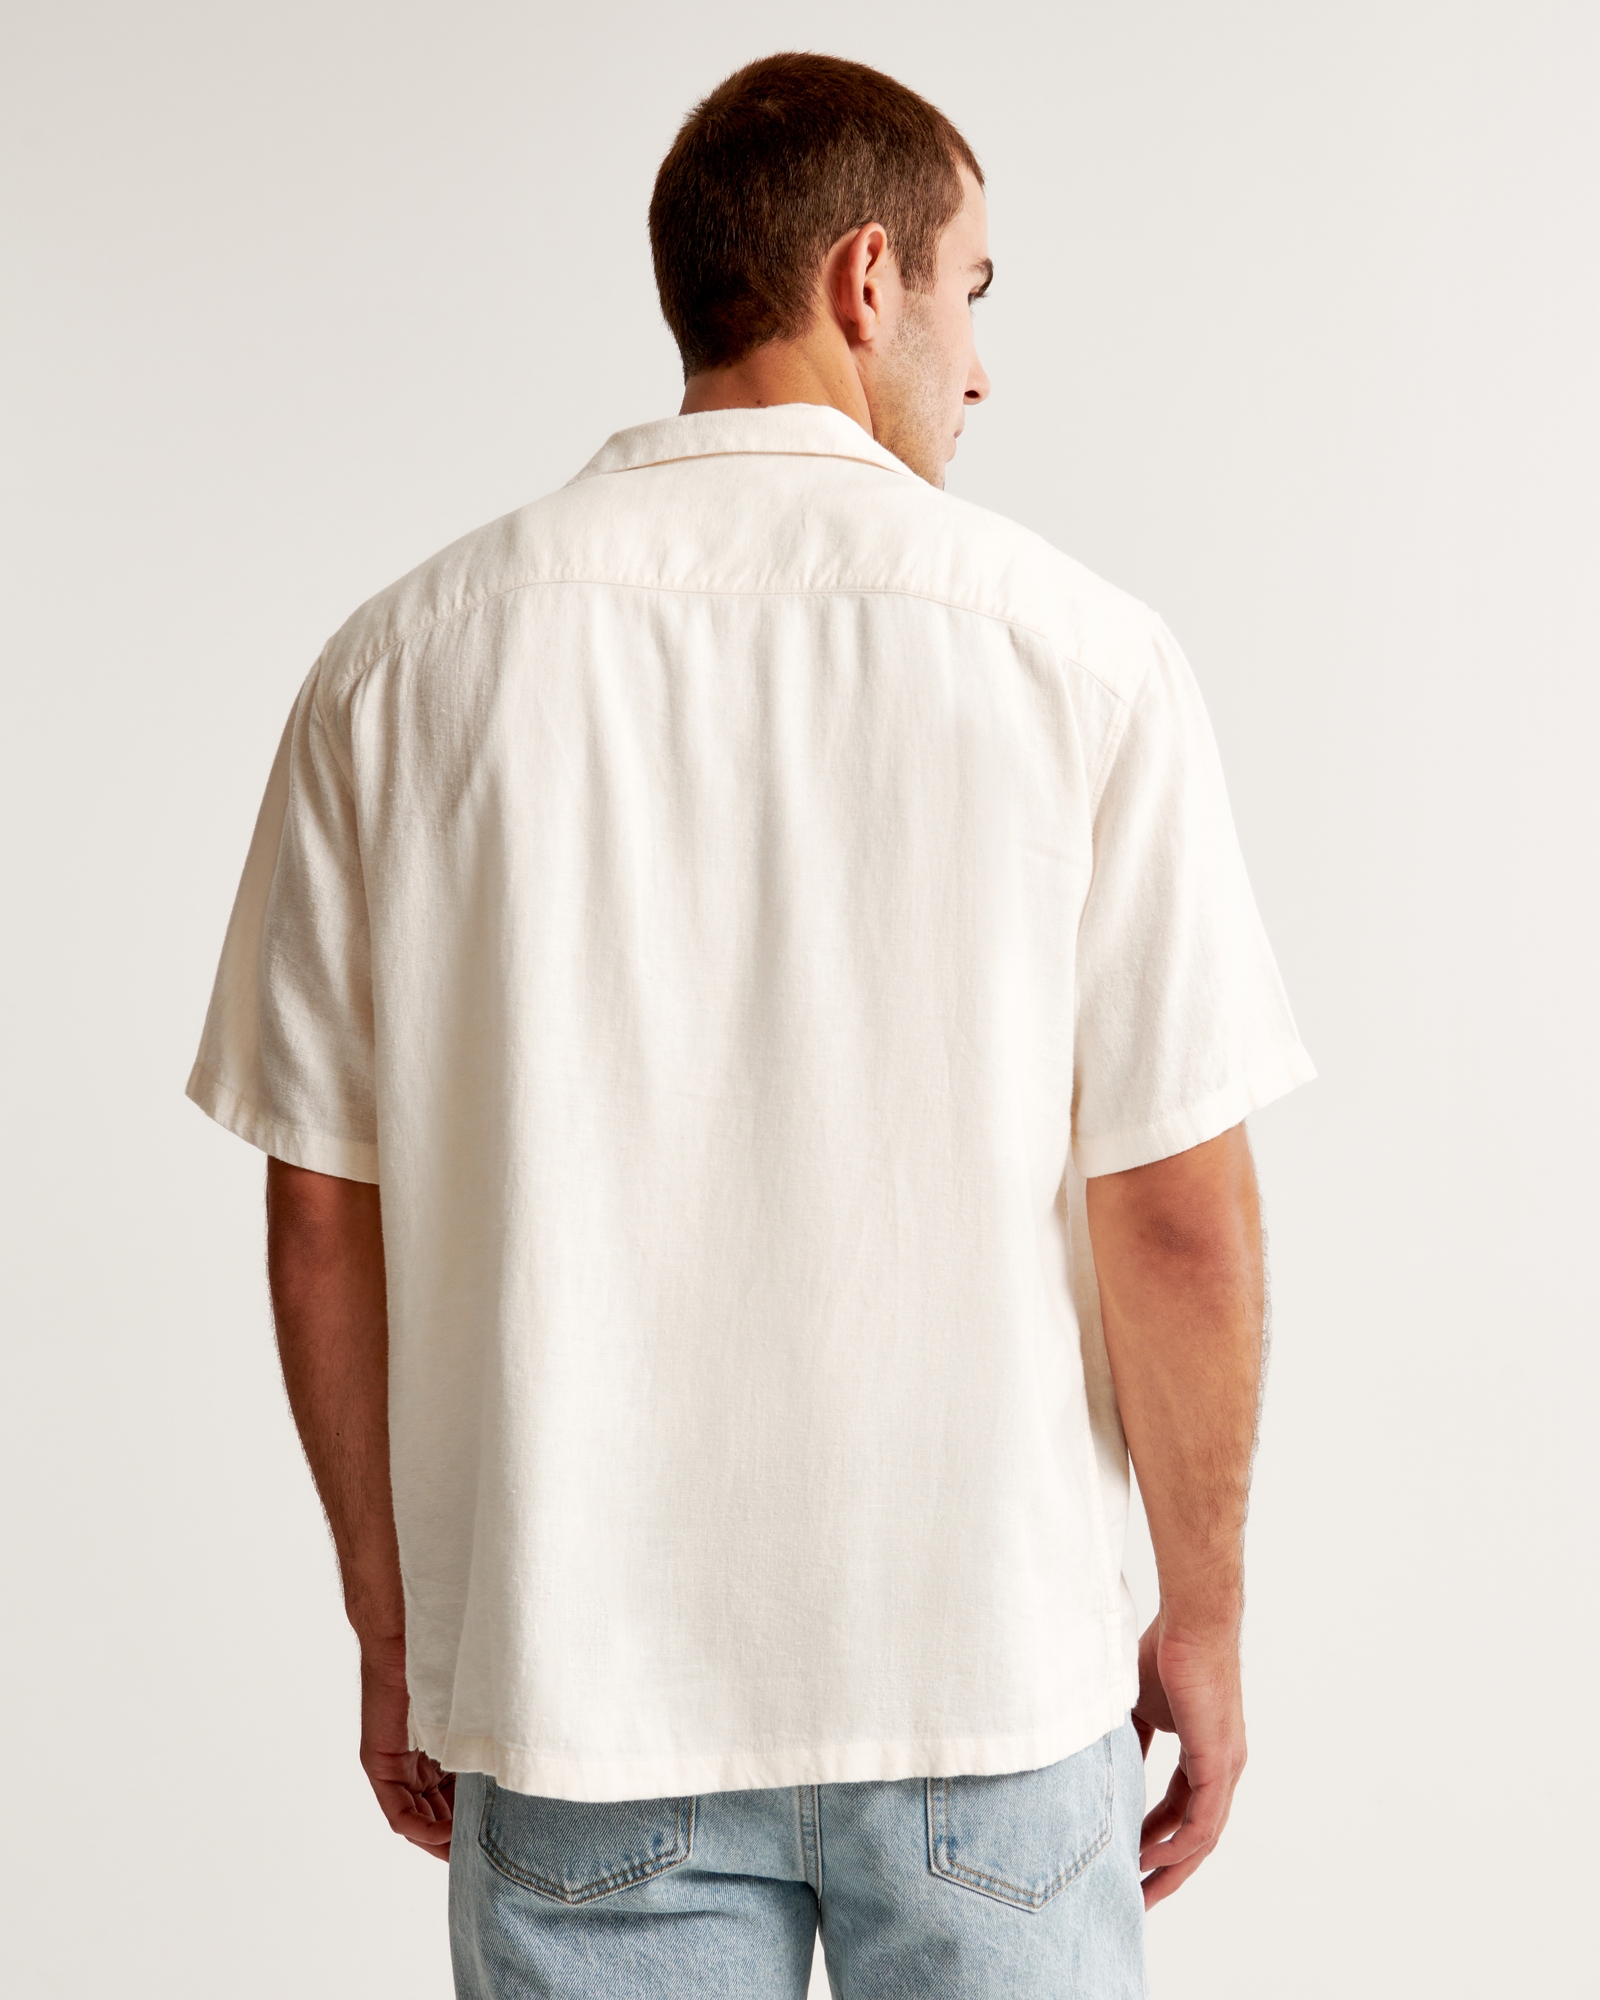 Summer Camp Collar Shirt in Crisp White Linen